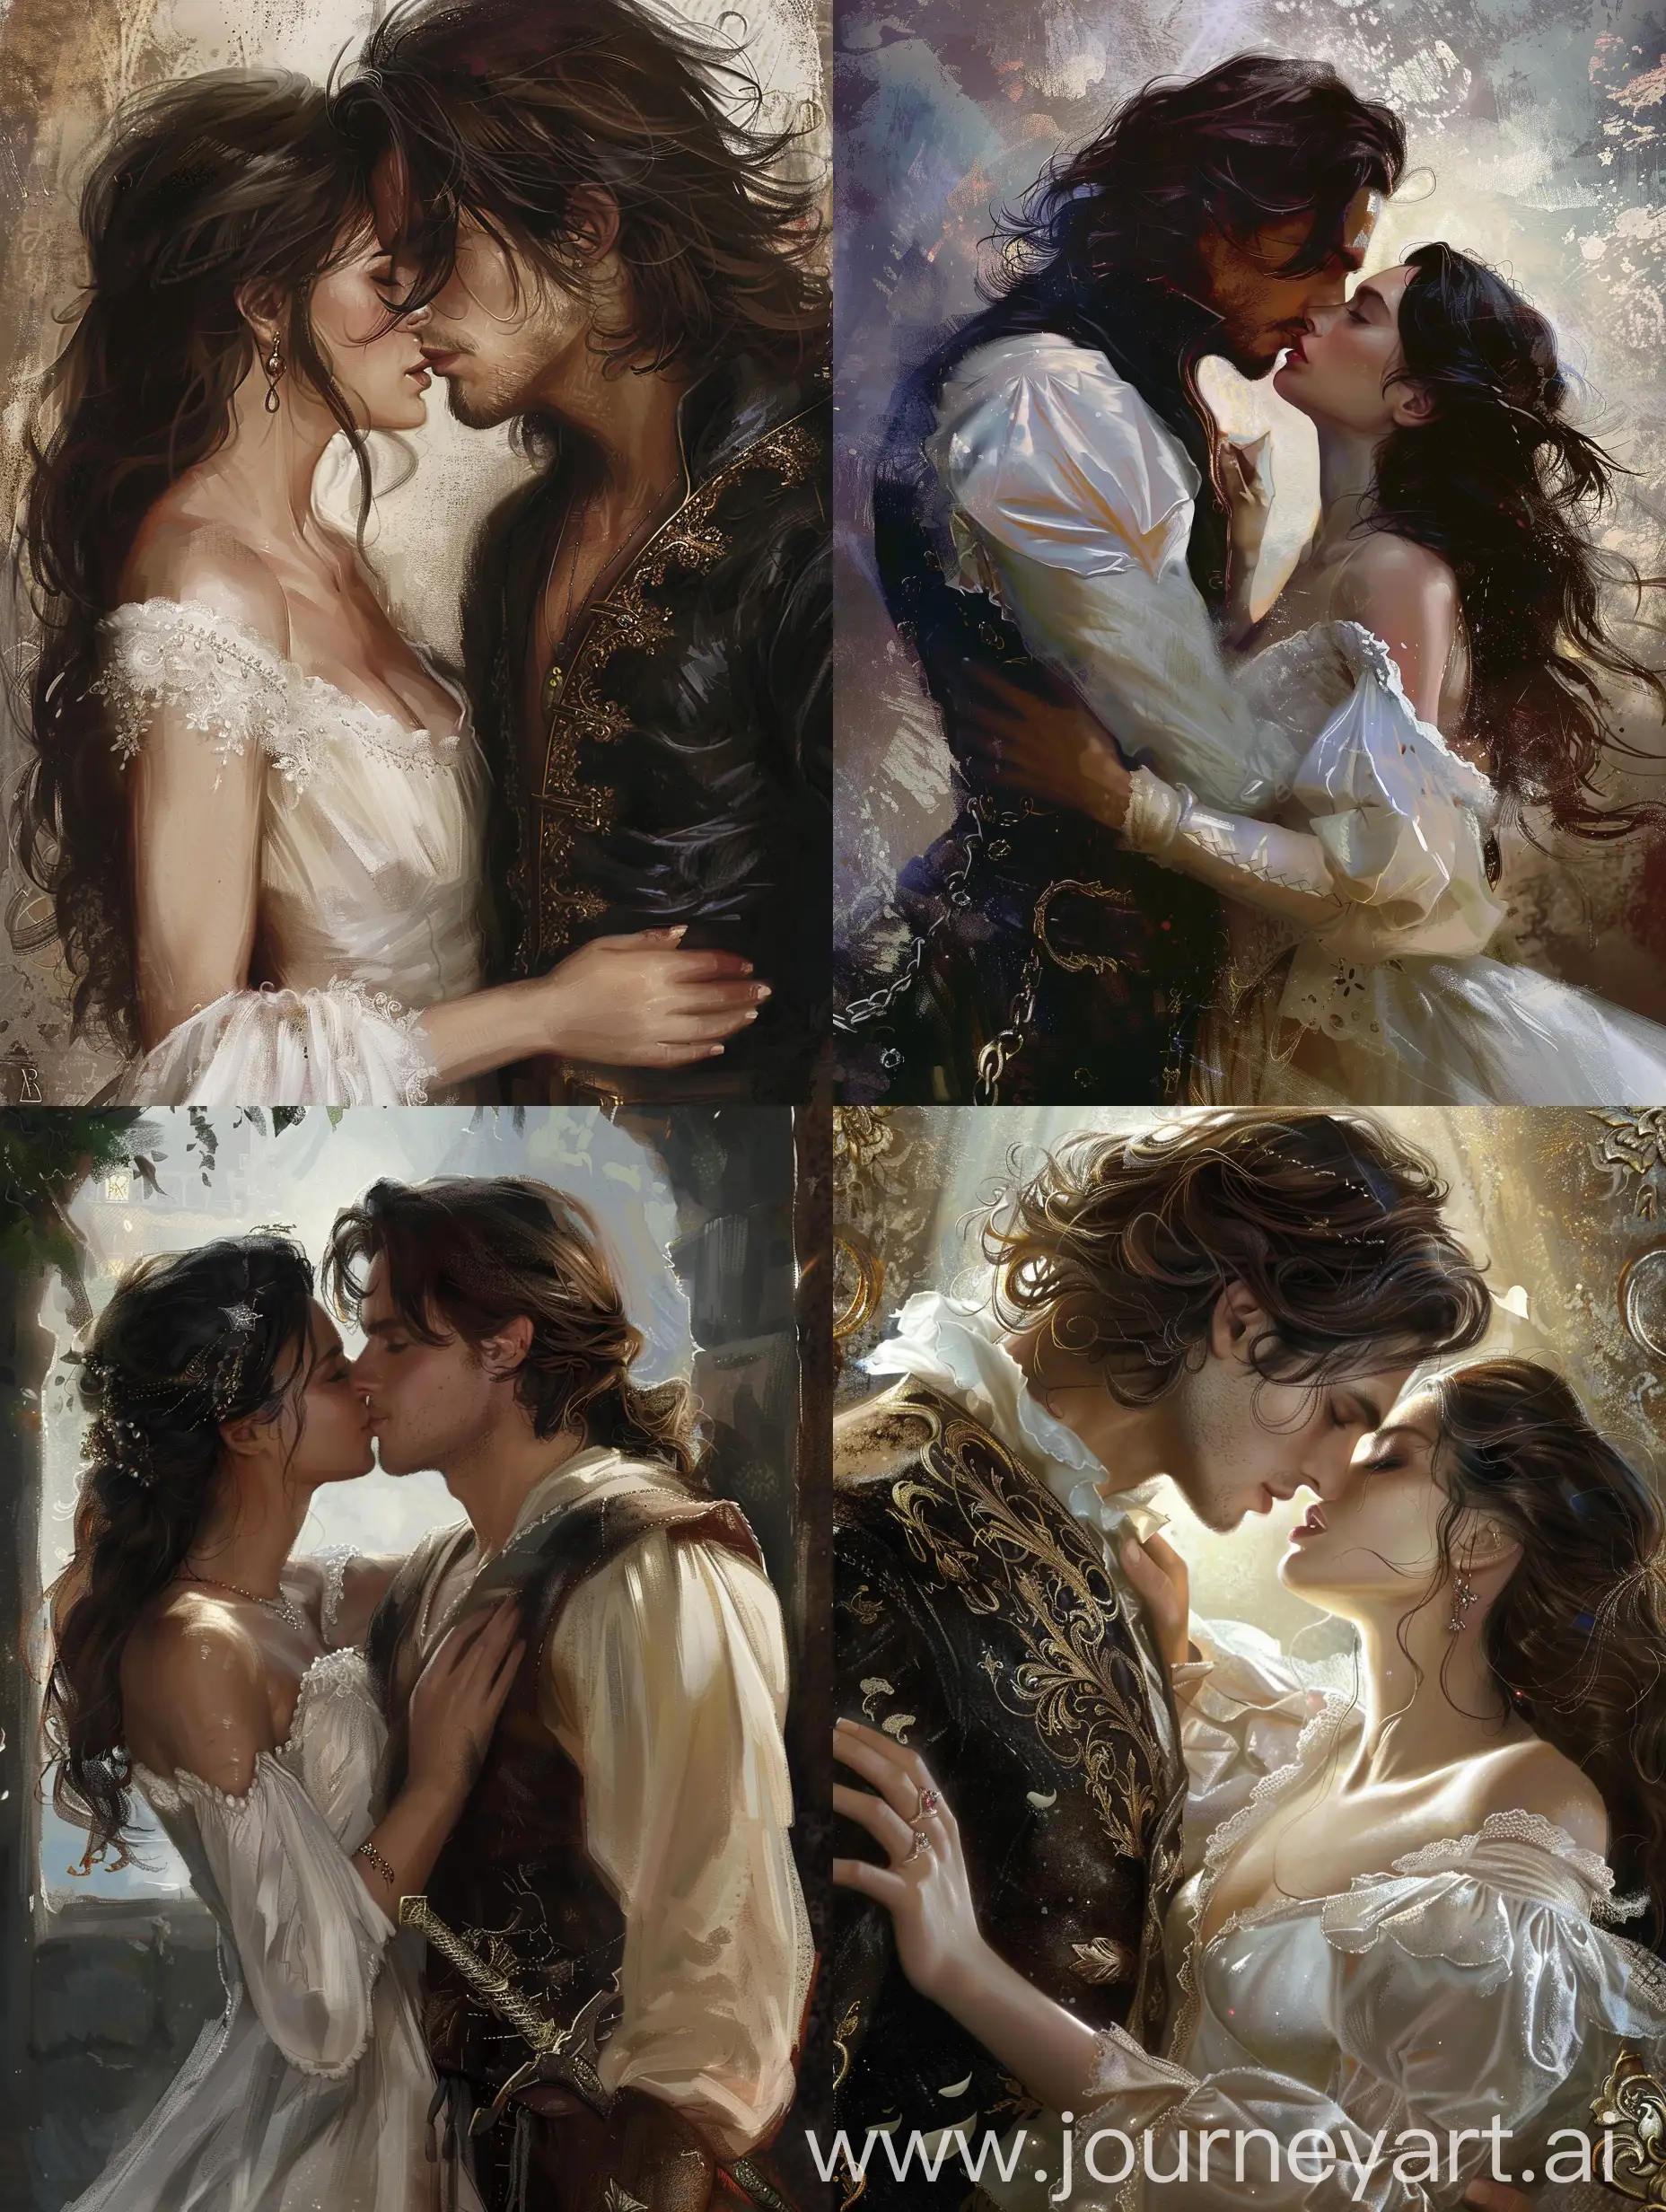 Fantasy-Romance-BrownHaired-Man-and-Brunette-Girl-in-White-Dress-Kissing-Dark-Prince